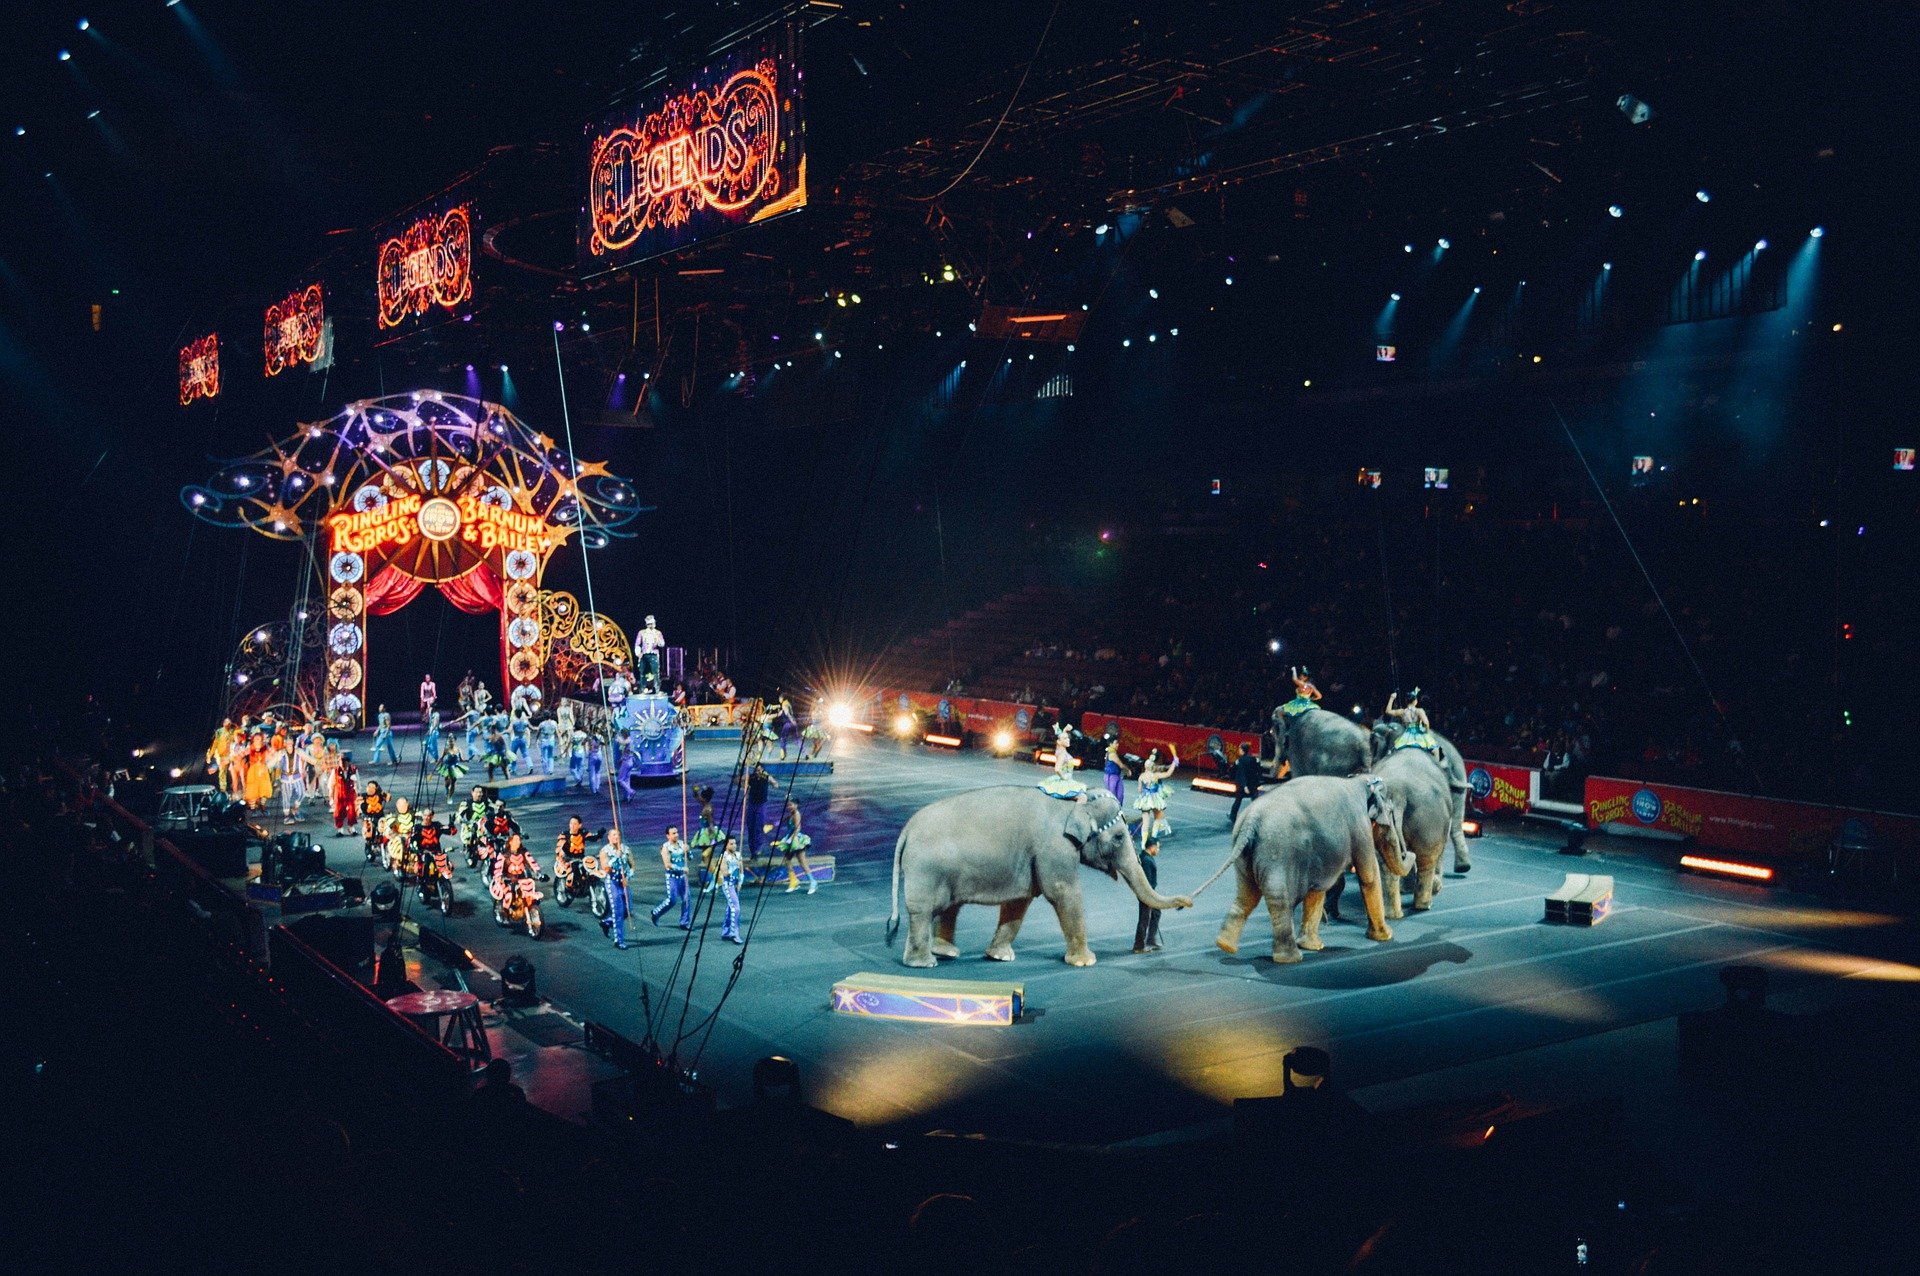 Circus scene | Source: Pixabay